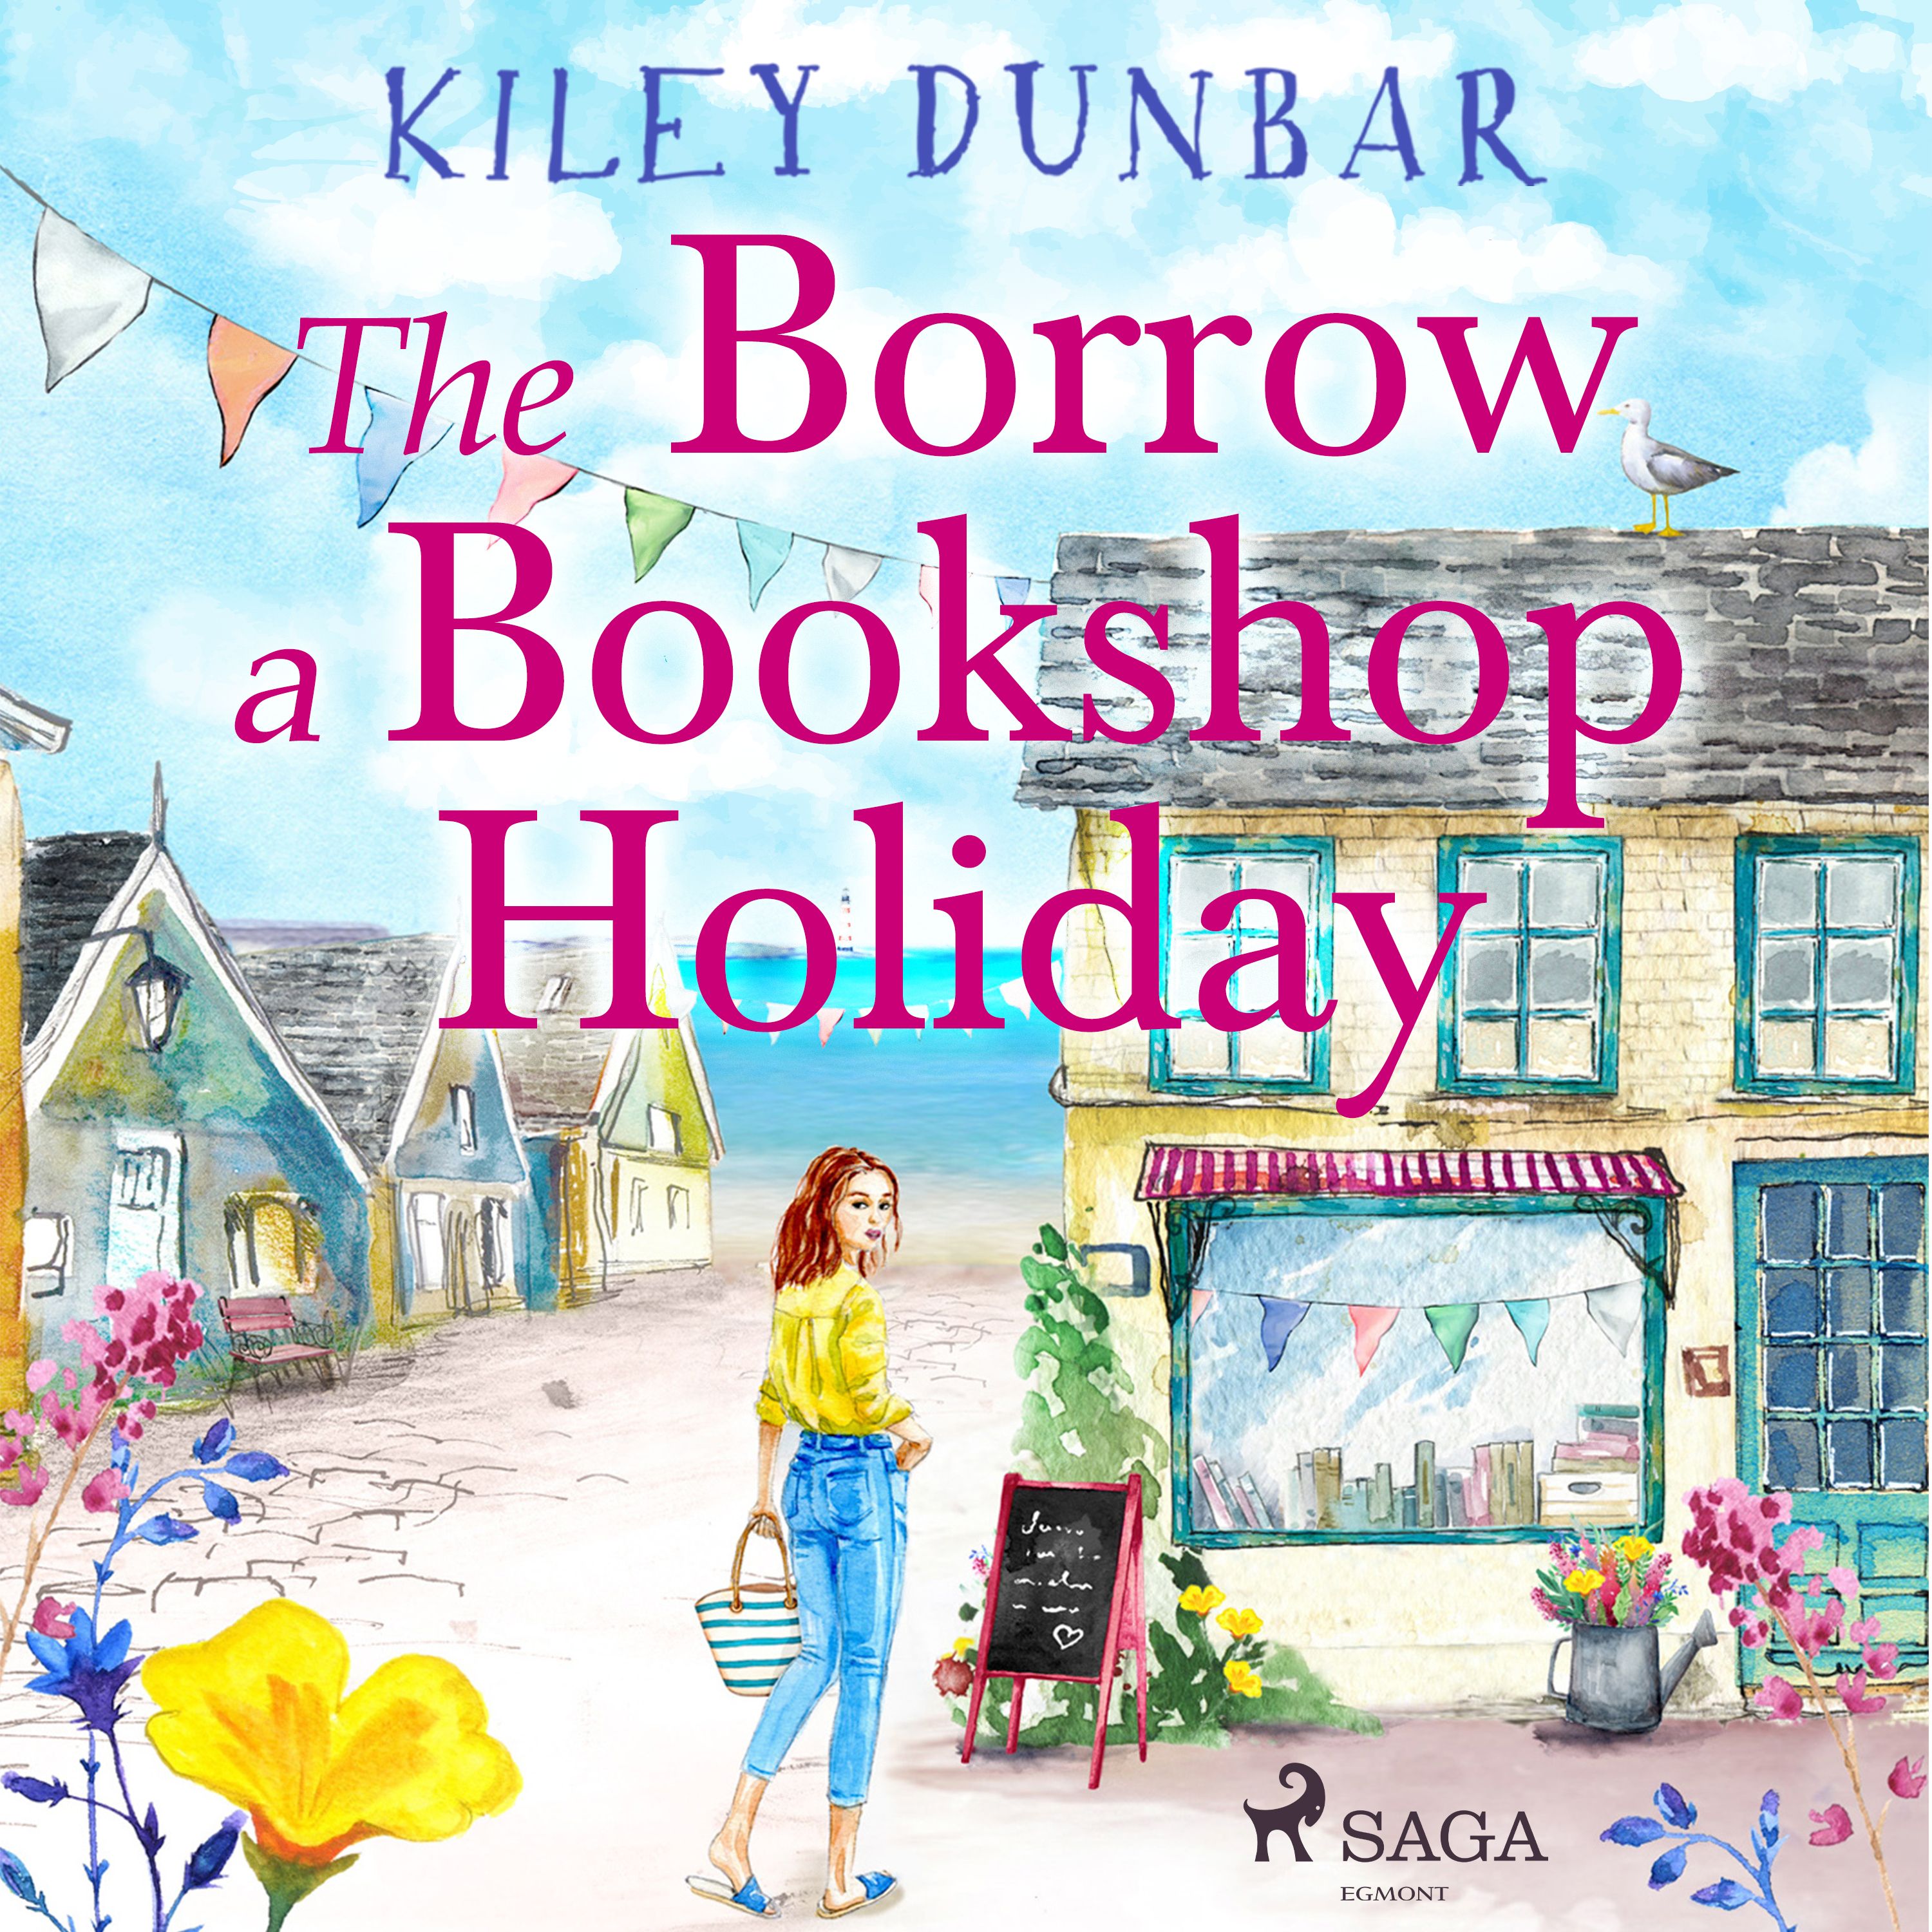 The Borrow a Bookshop Holiday, ljudbok av Kiley Dunbar